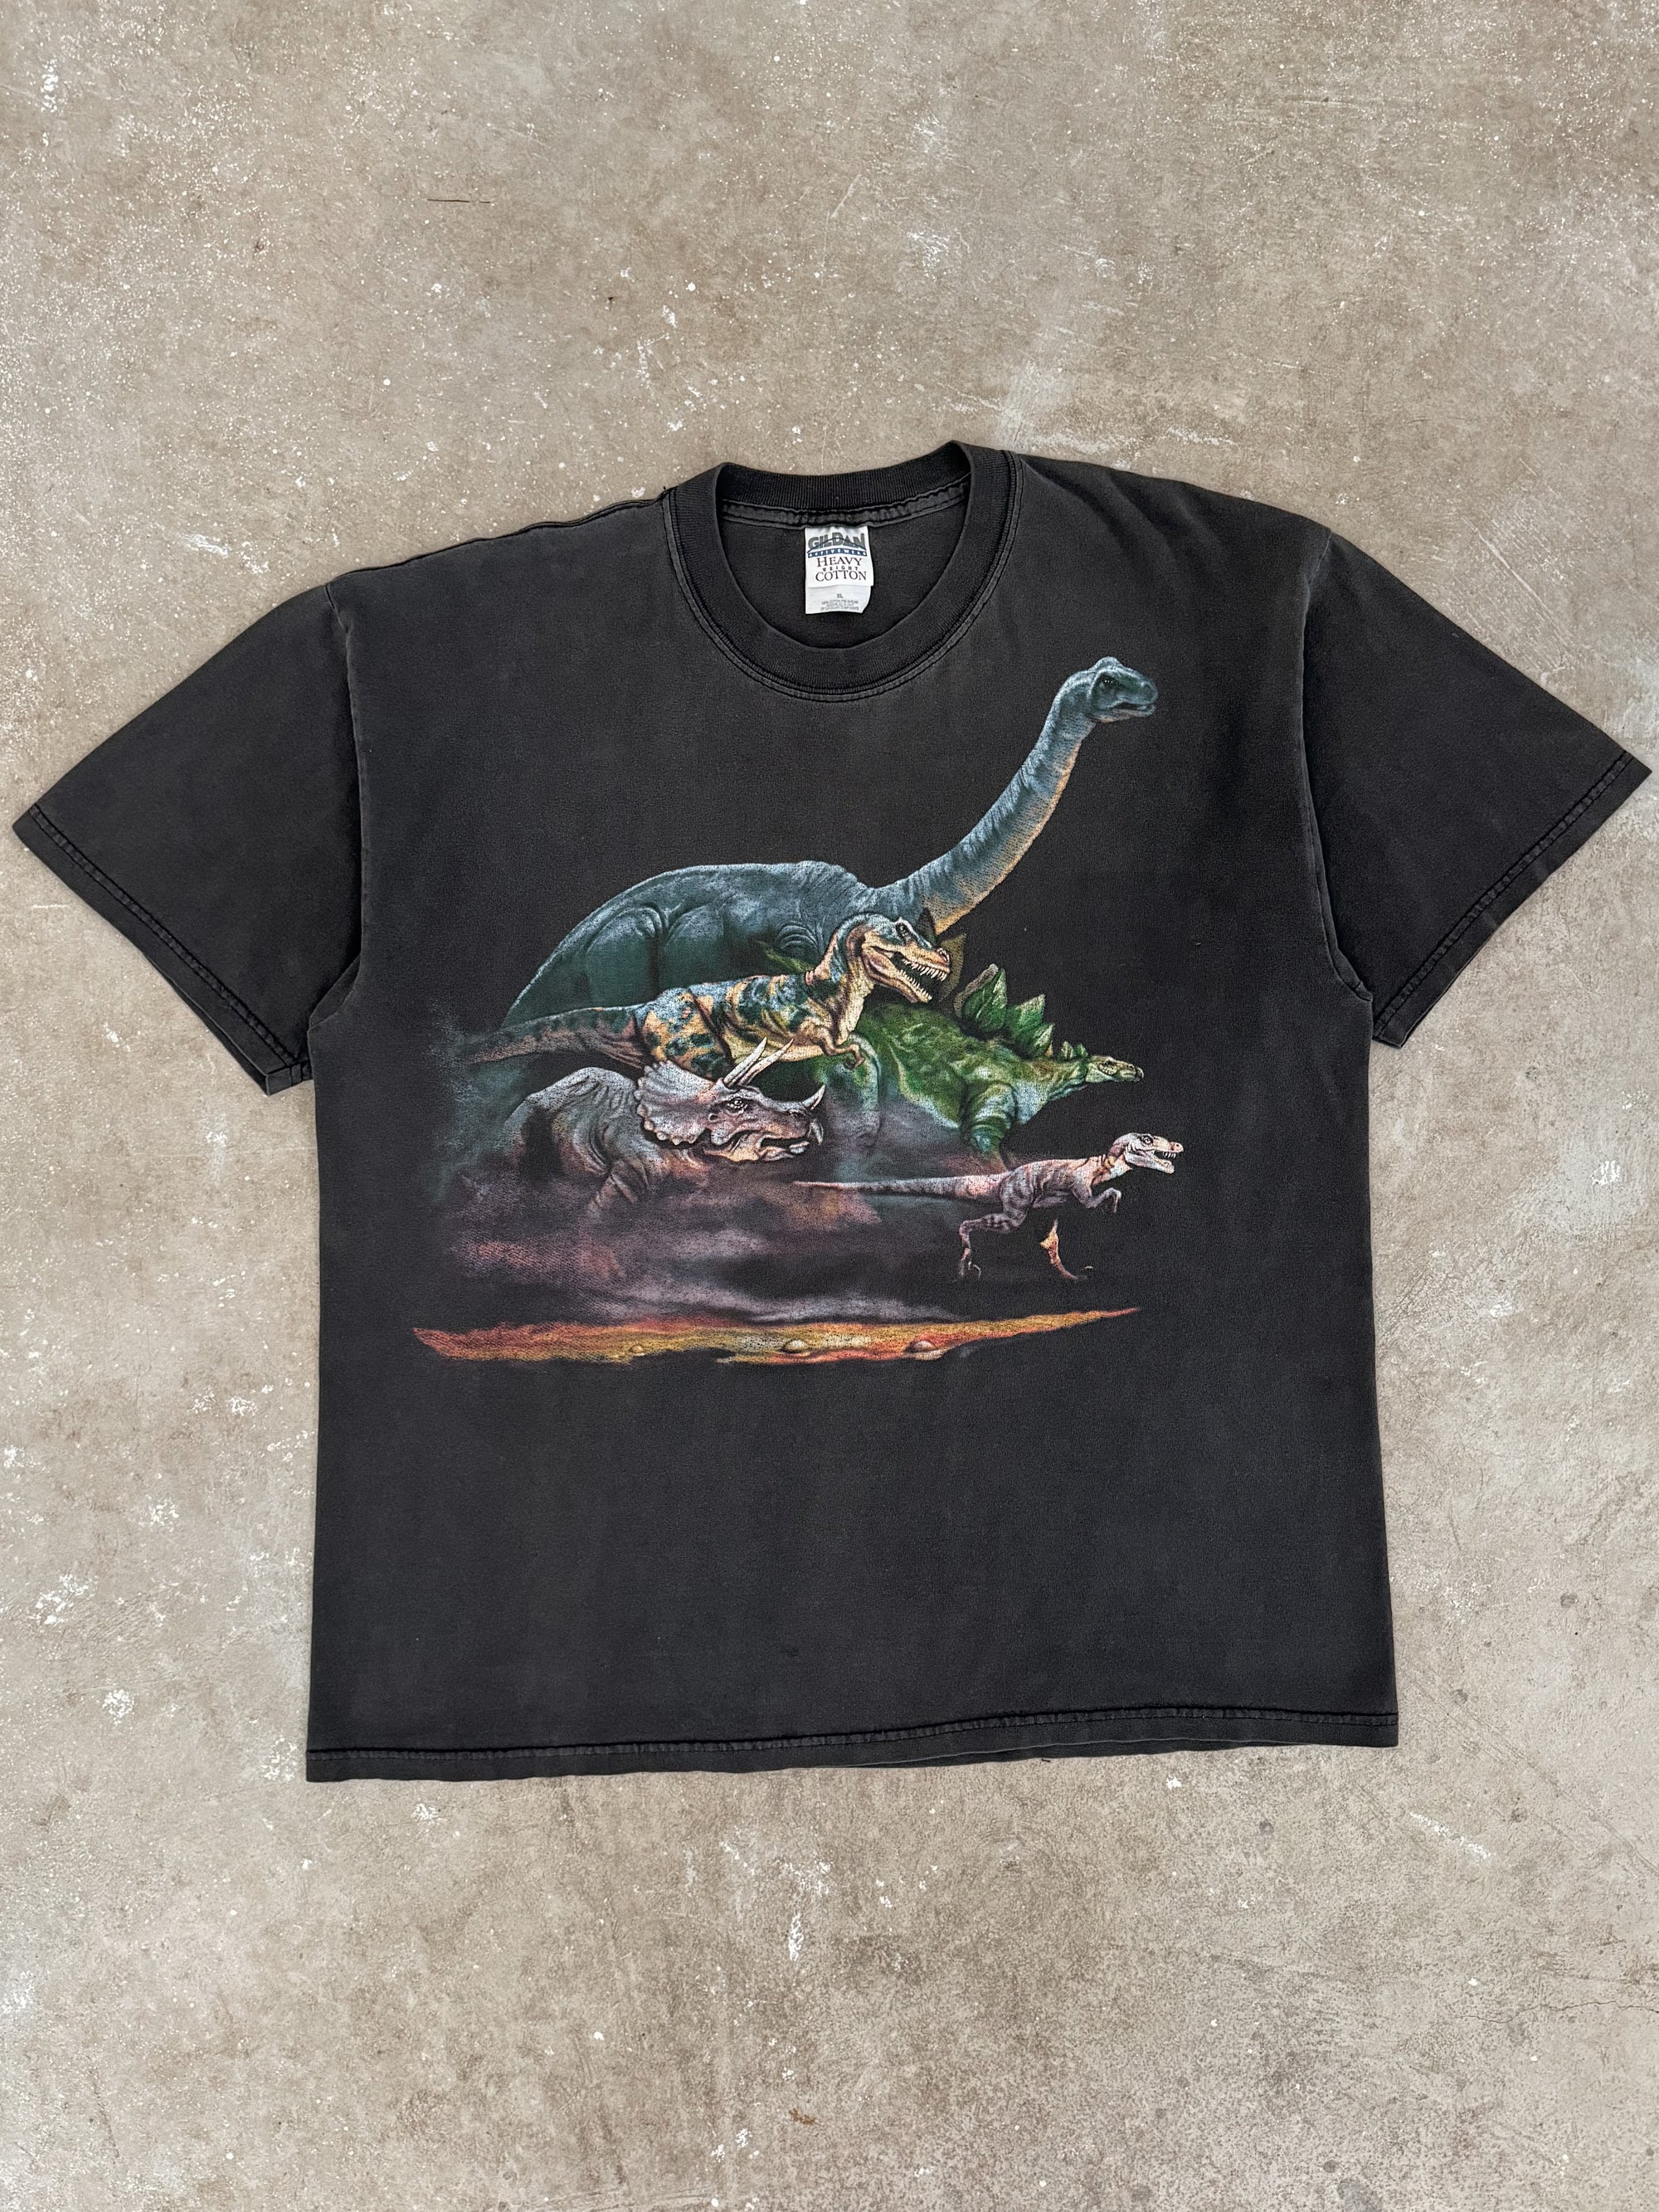 2000s "Dinosaurs" Faded Tee (XL)